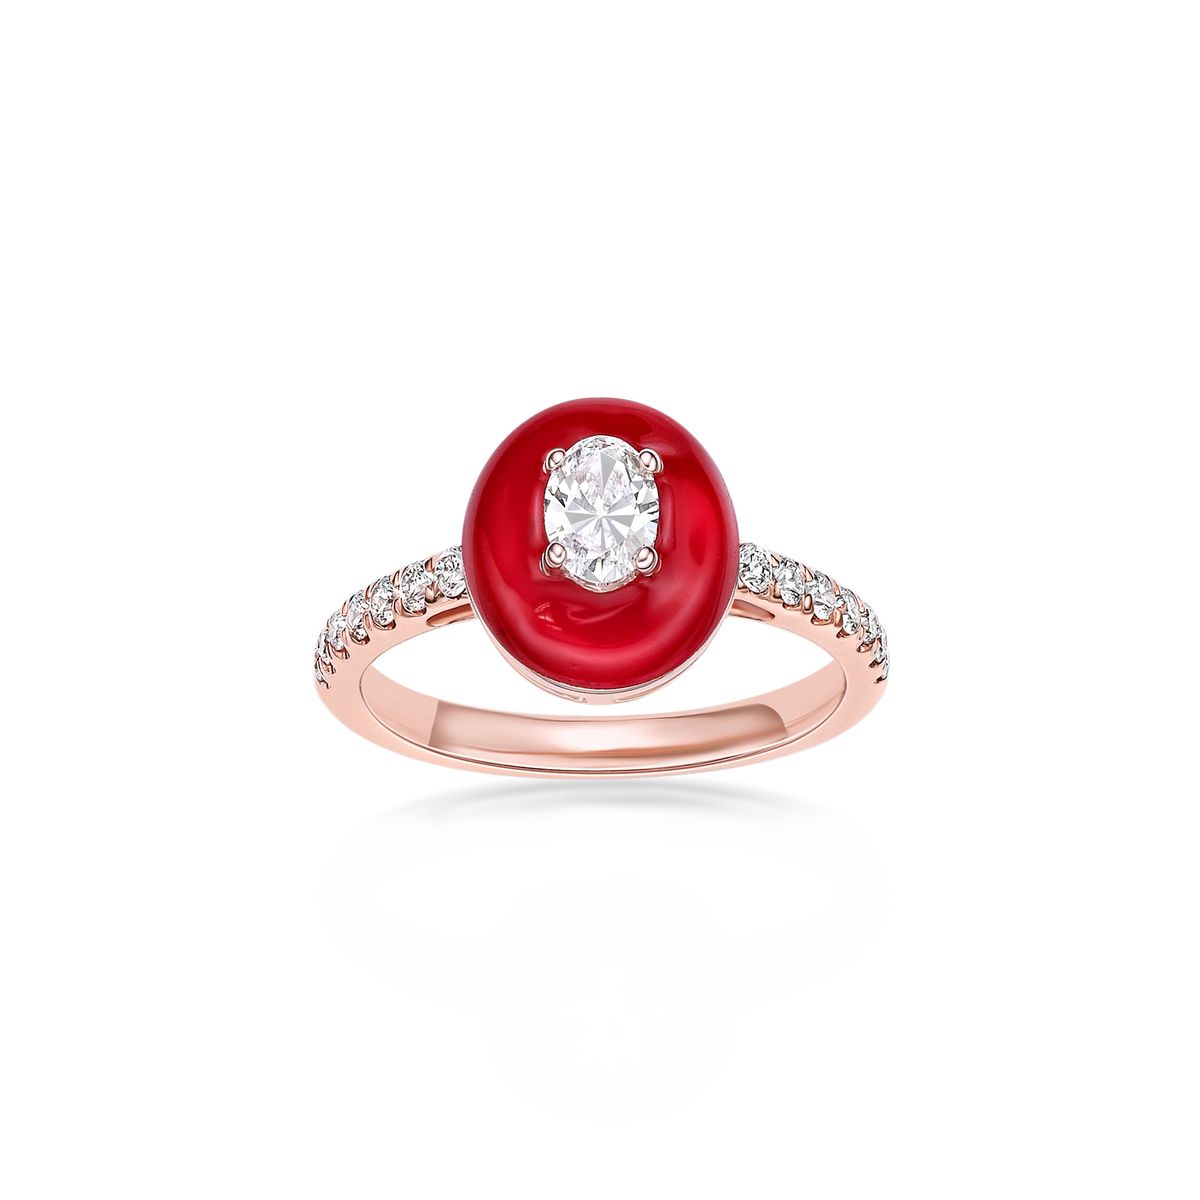 HE53109Q4RLG 14K rose gold oval diamond ring